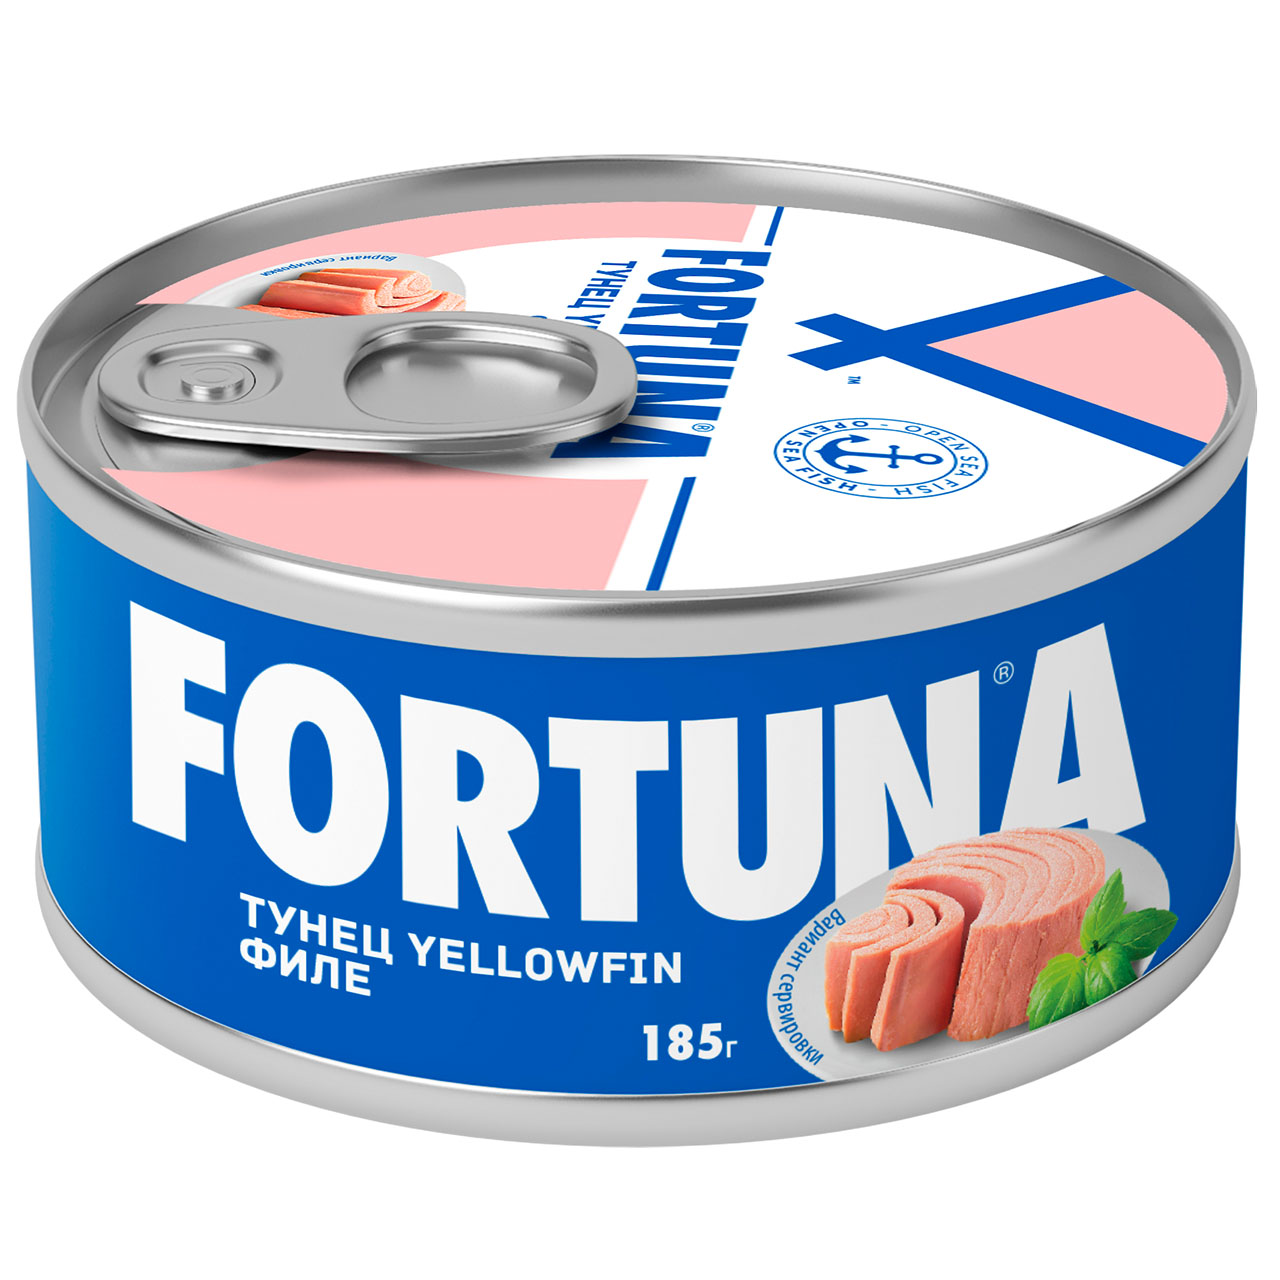 Тунец FORTUNA филе yellowfin, 185г